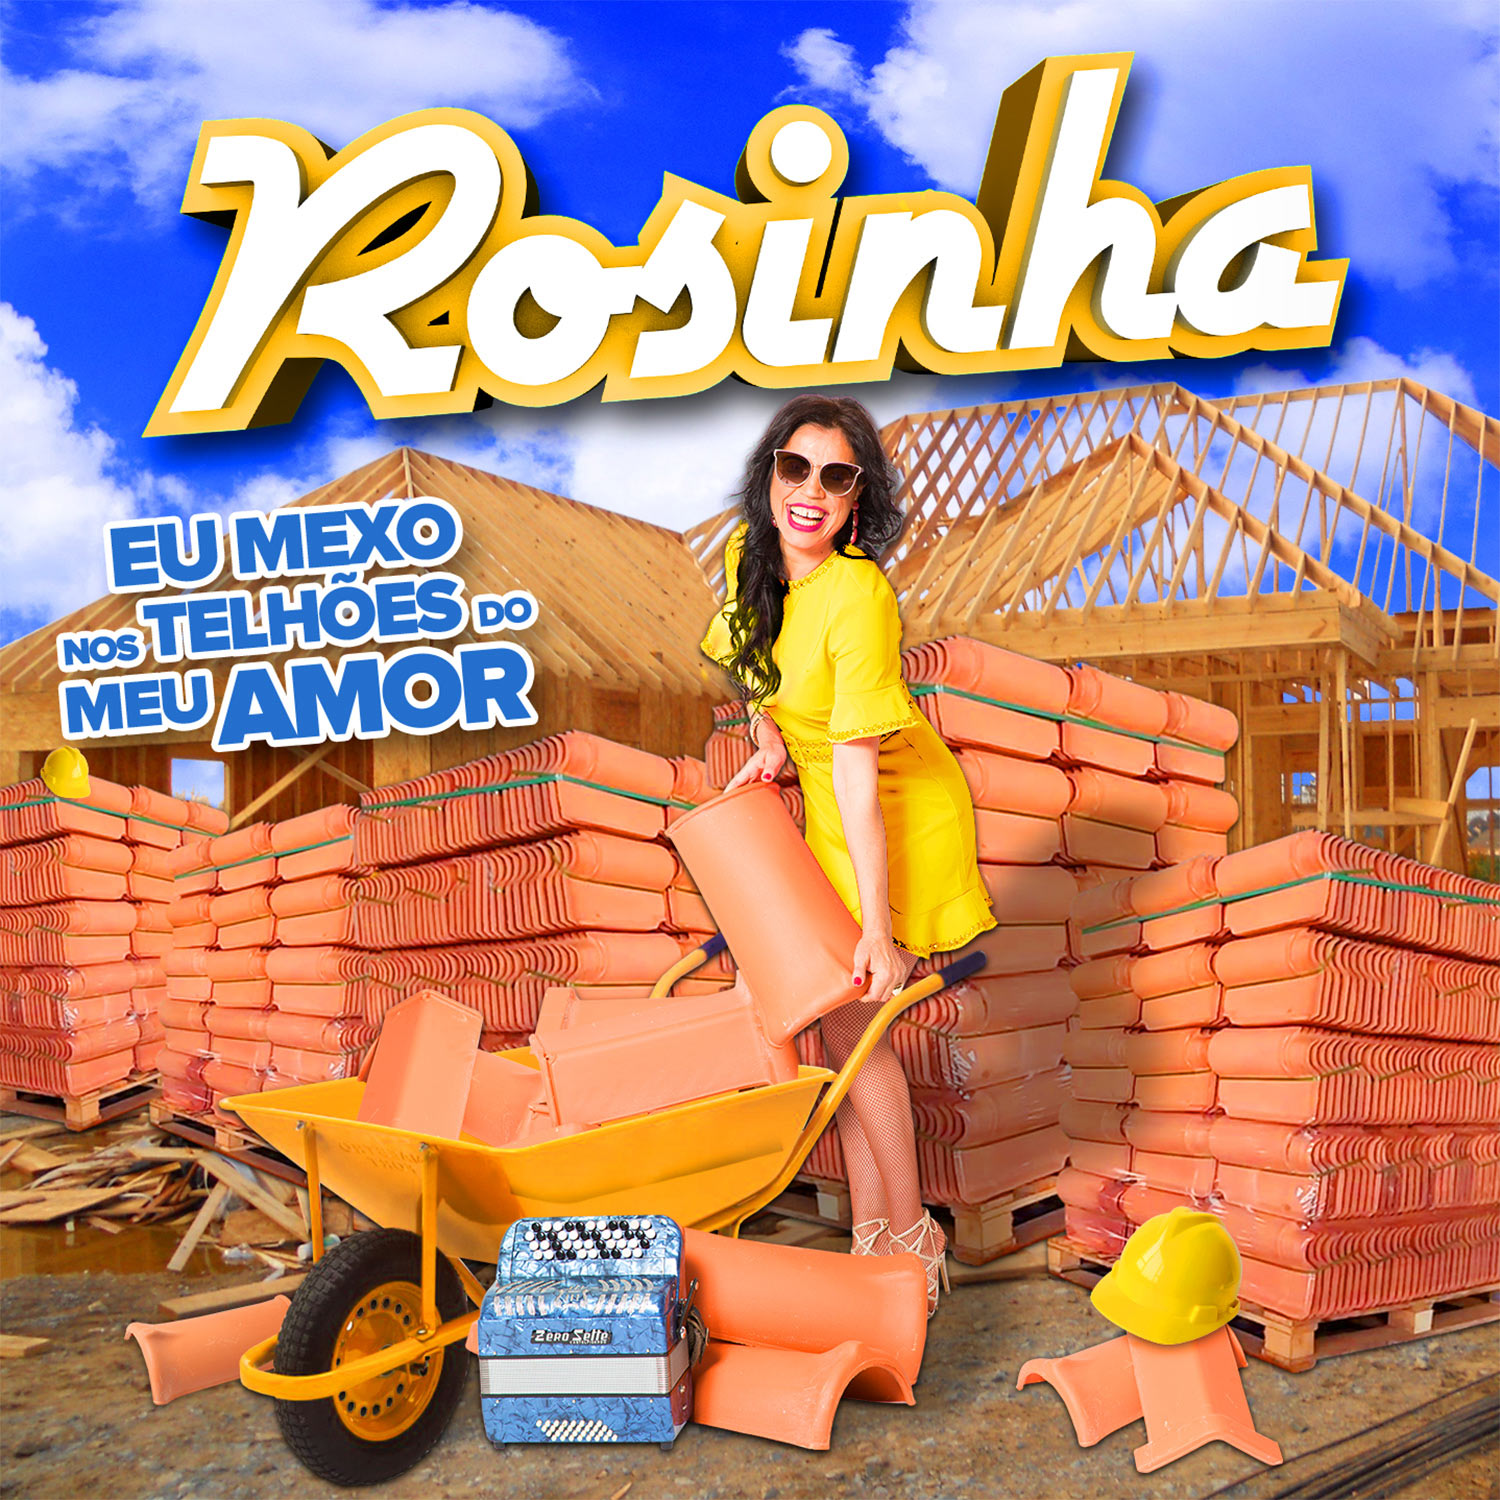 Artista Rosinha, Cantora, espectaculos, contactos para festas, concertos, Rosinha, artistas portuguesas, cantoras portuguesas, musica popular